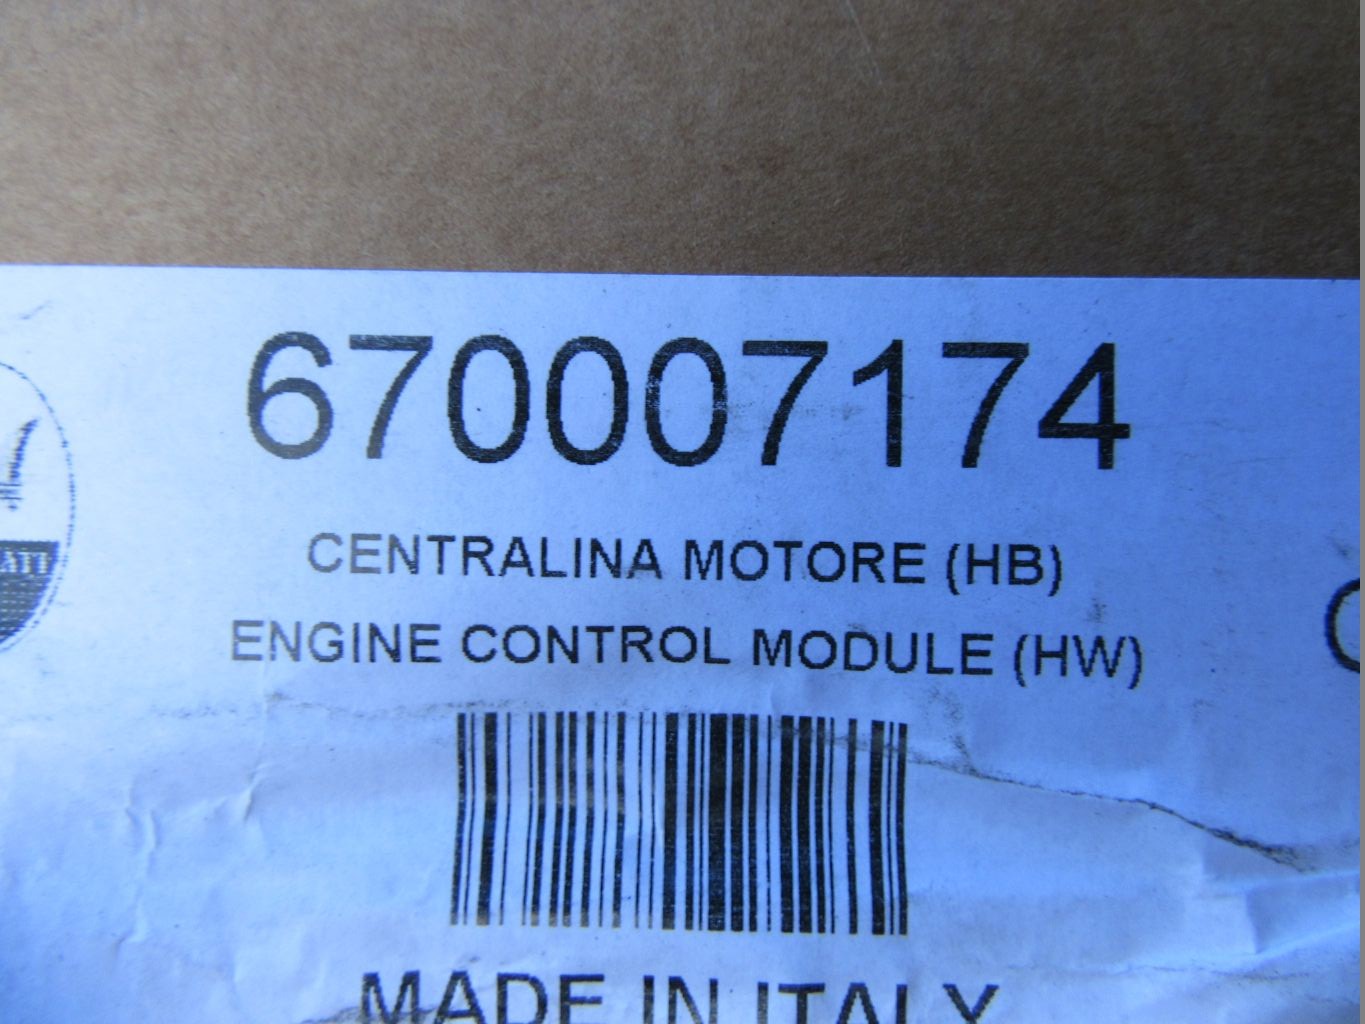 Maserati engine control computer module ECU #7125